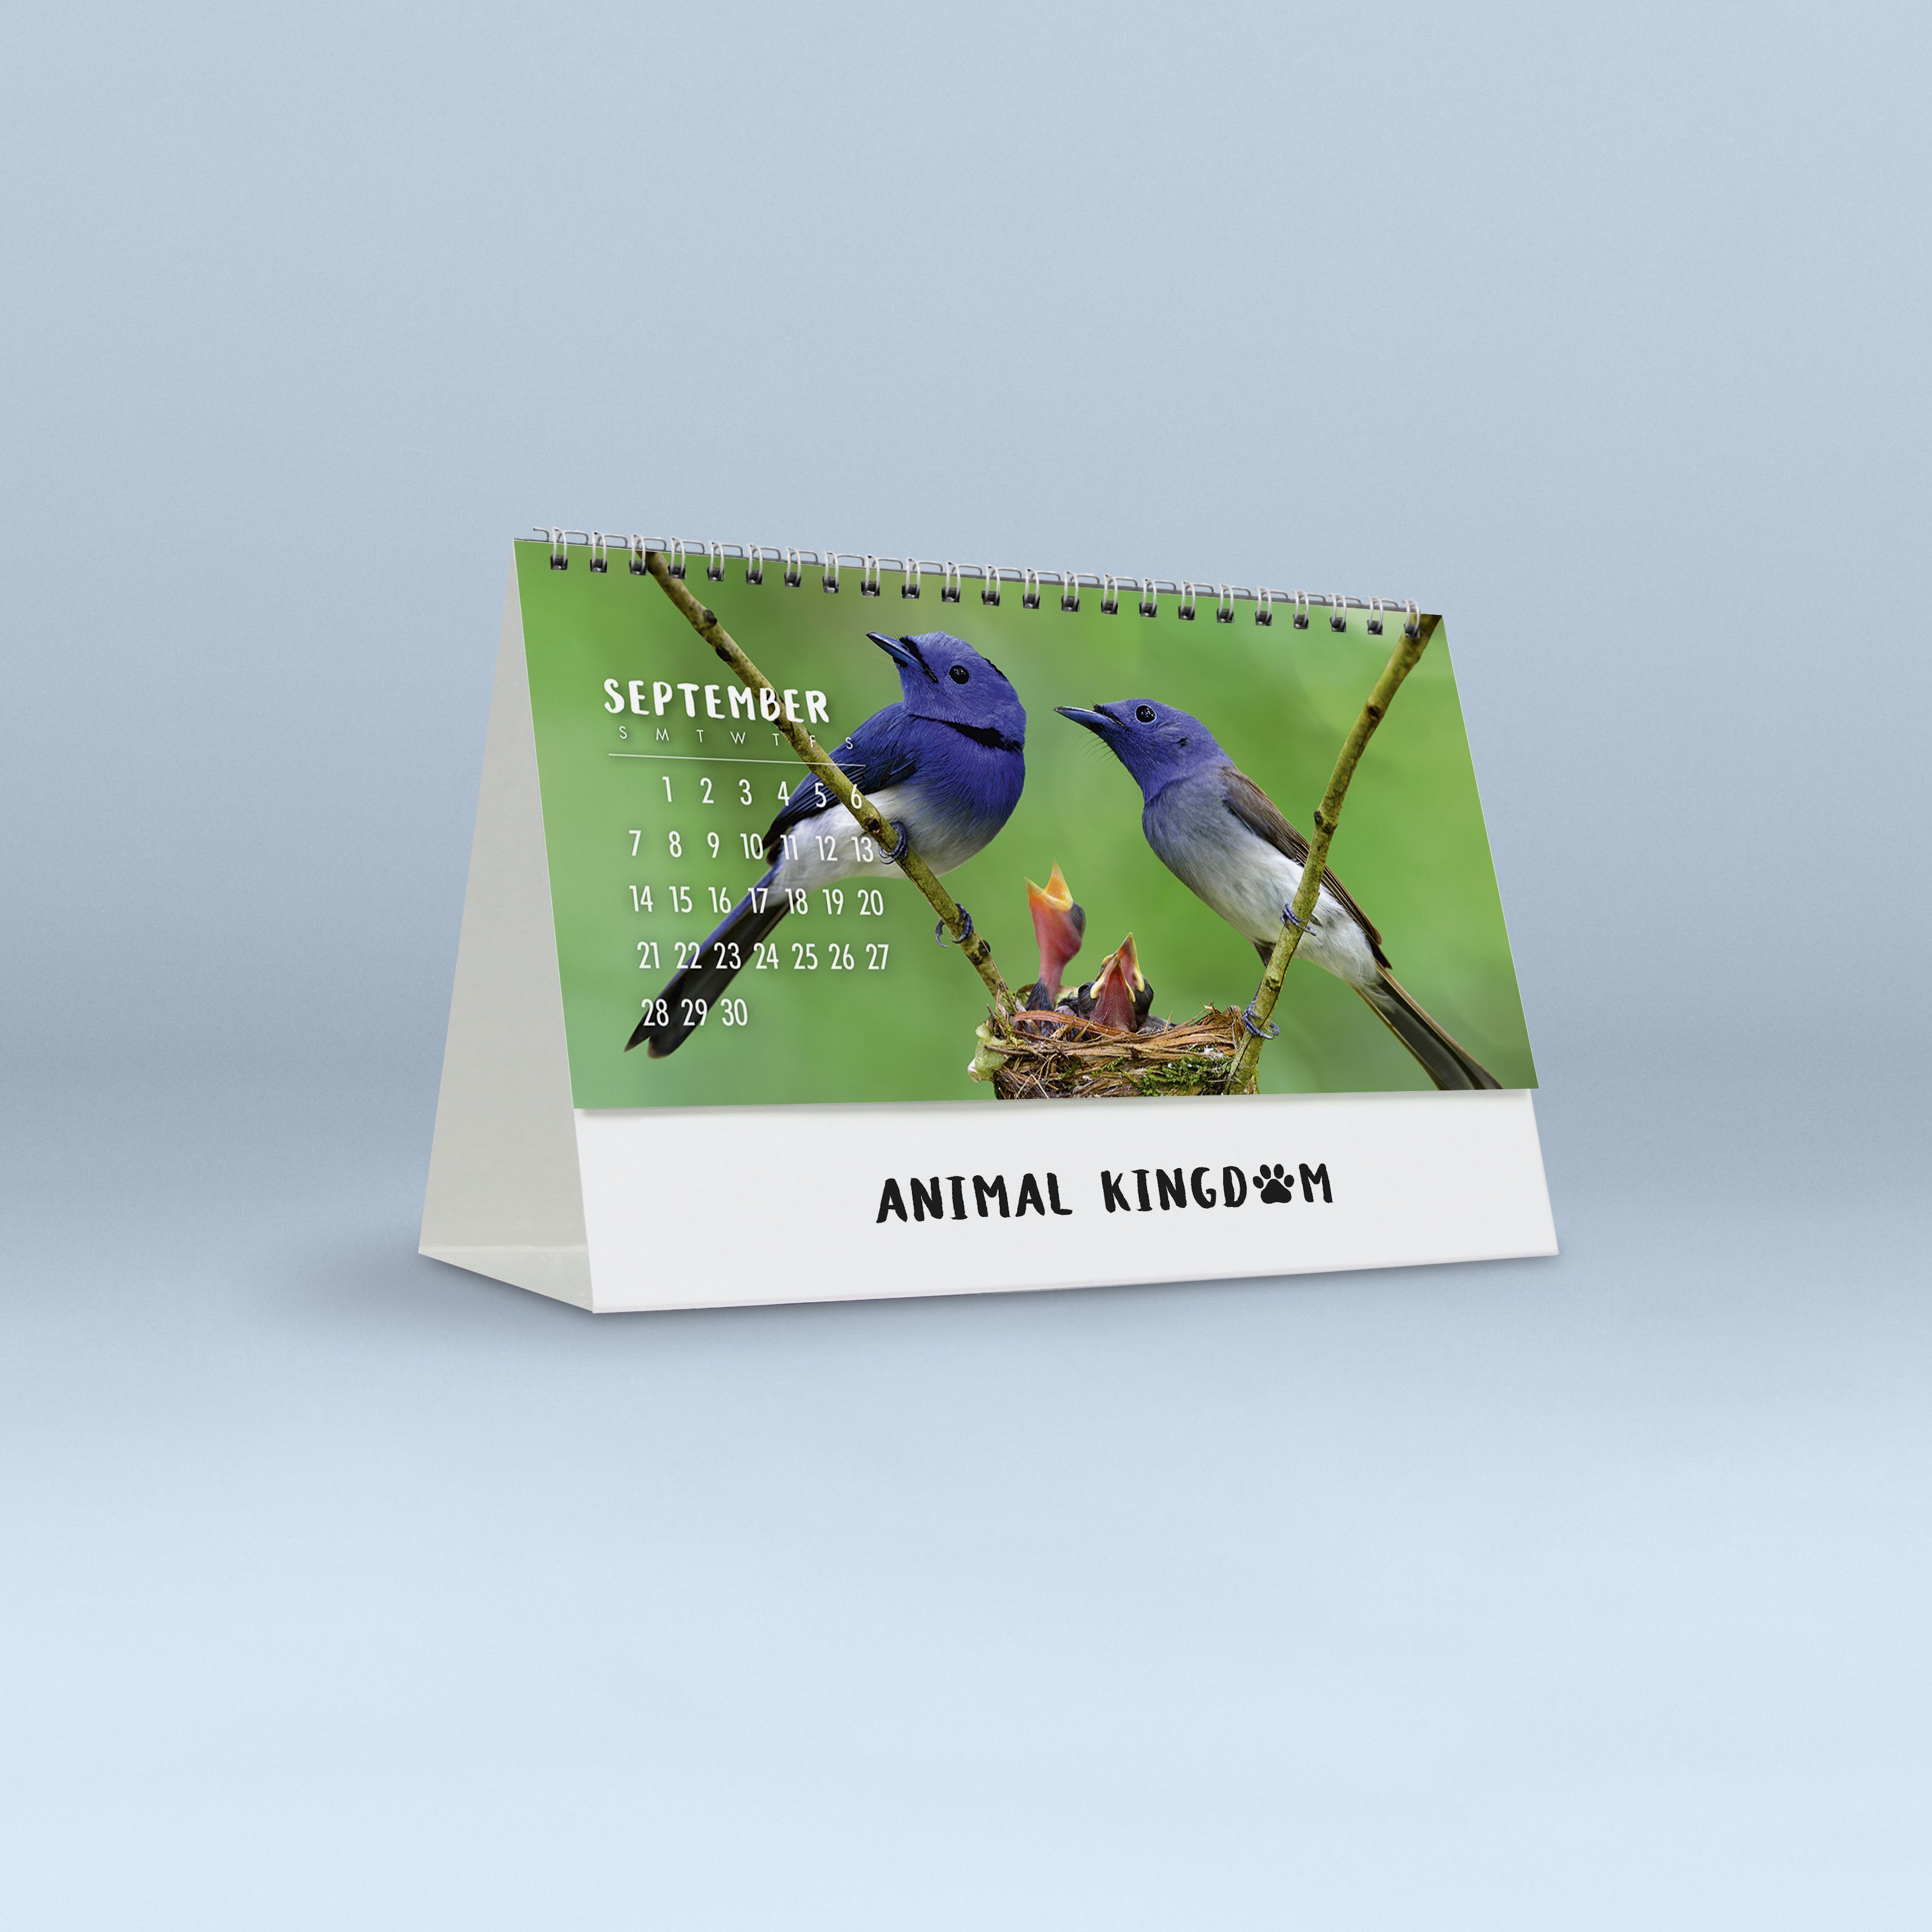 Animal Kingdom_4257_25_18